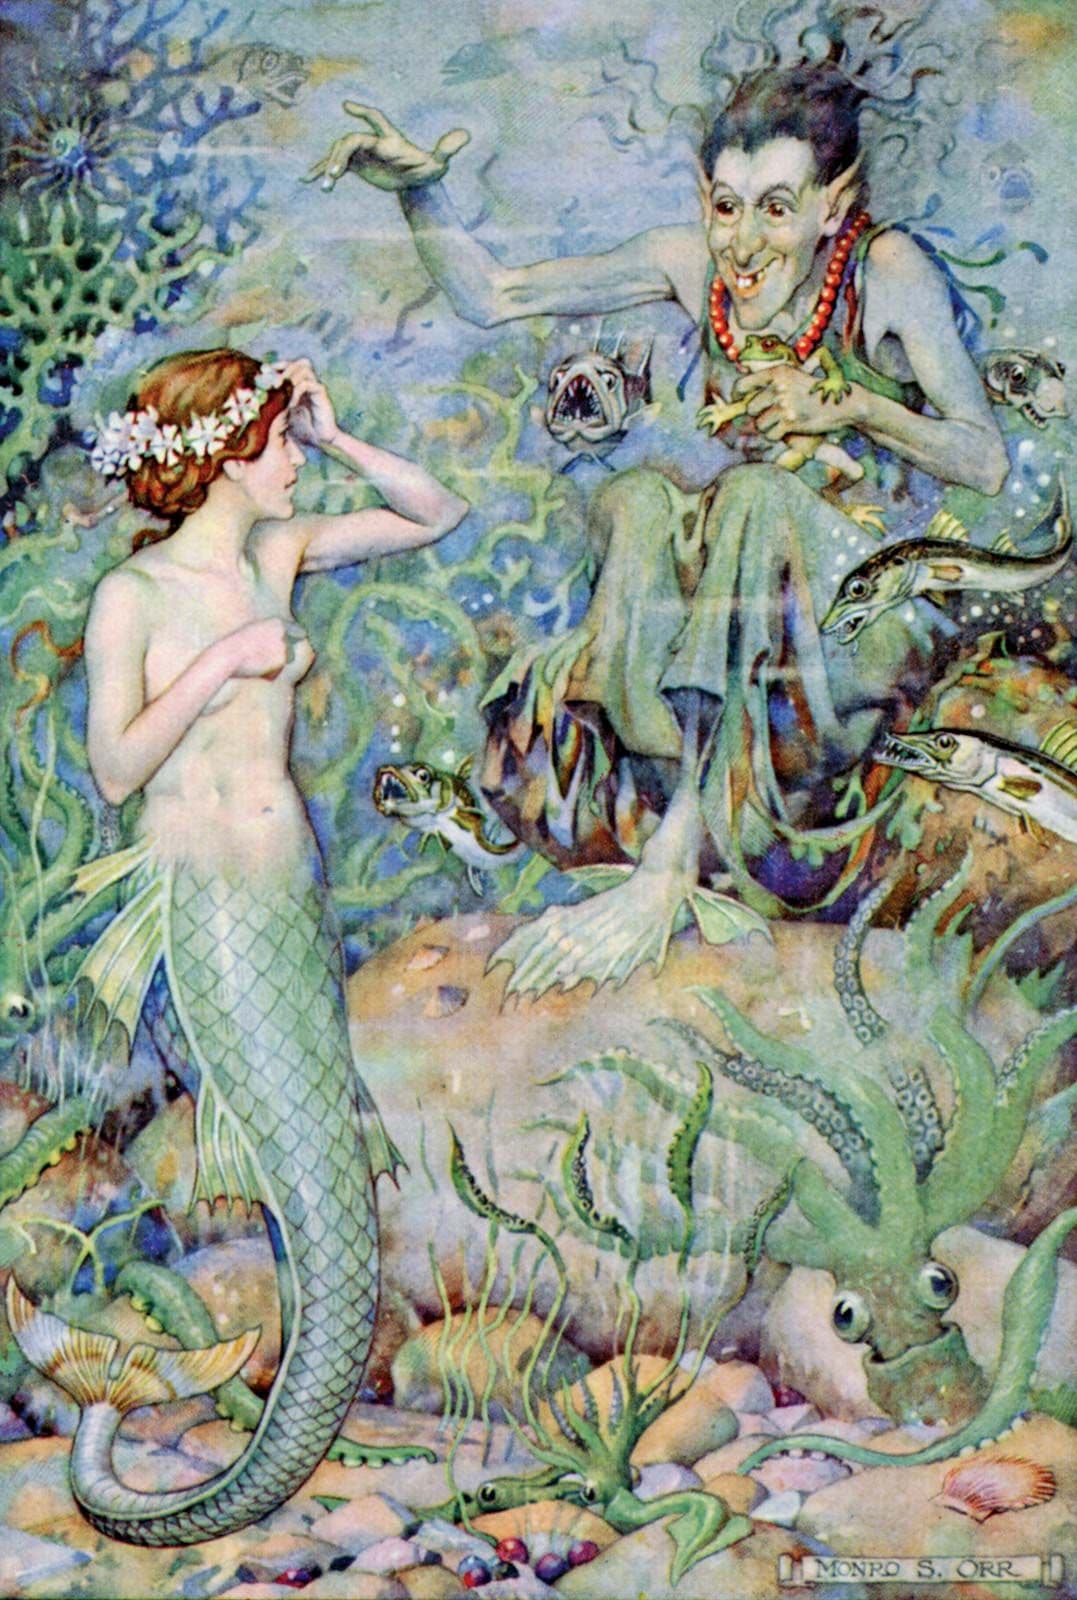 Illustration in Hans Christian Andersen’s “The Little Mermaid”